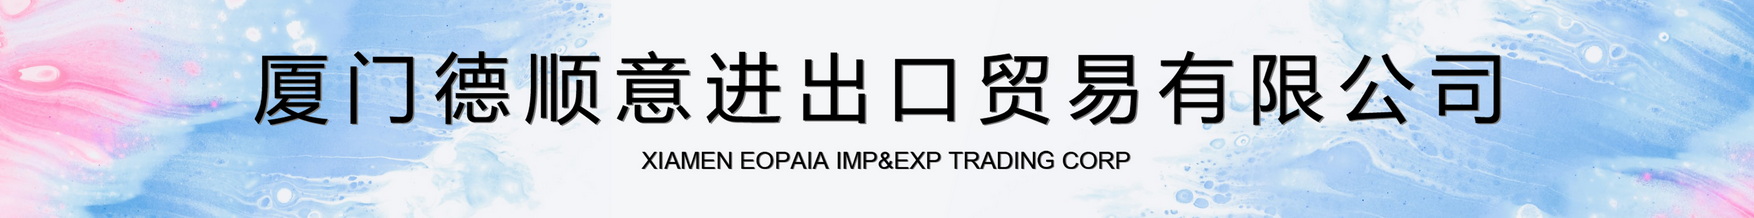 Xiamen EOPAIA IPP & Exp Trading Corp